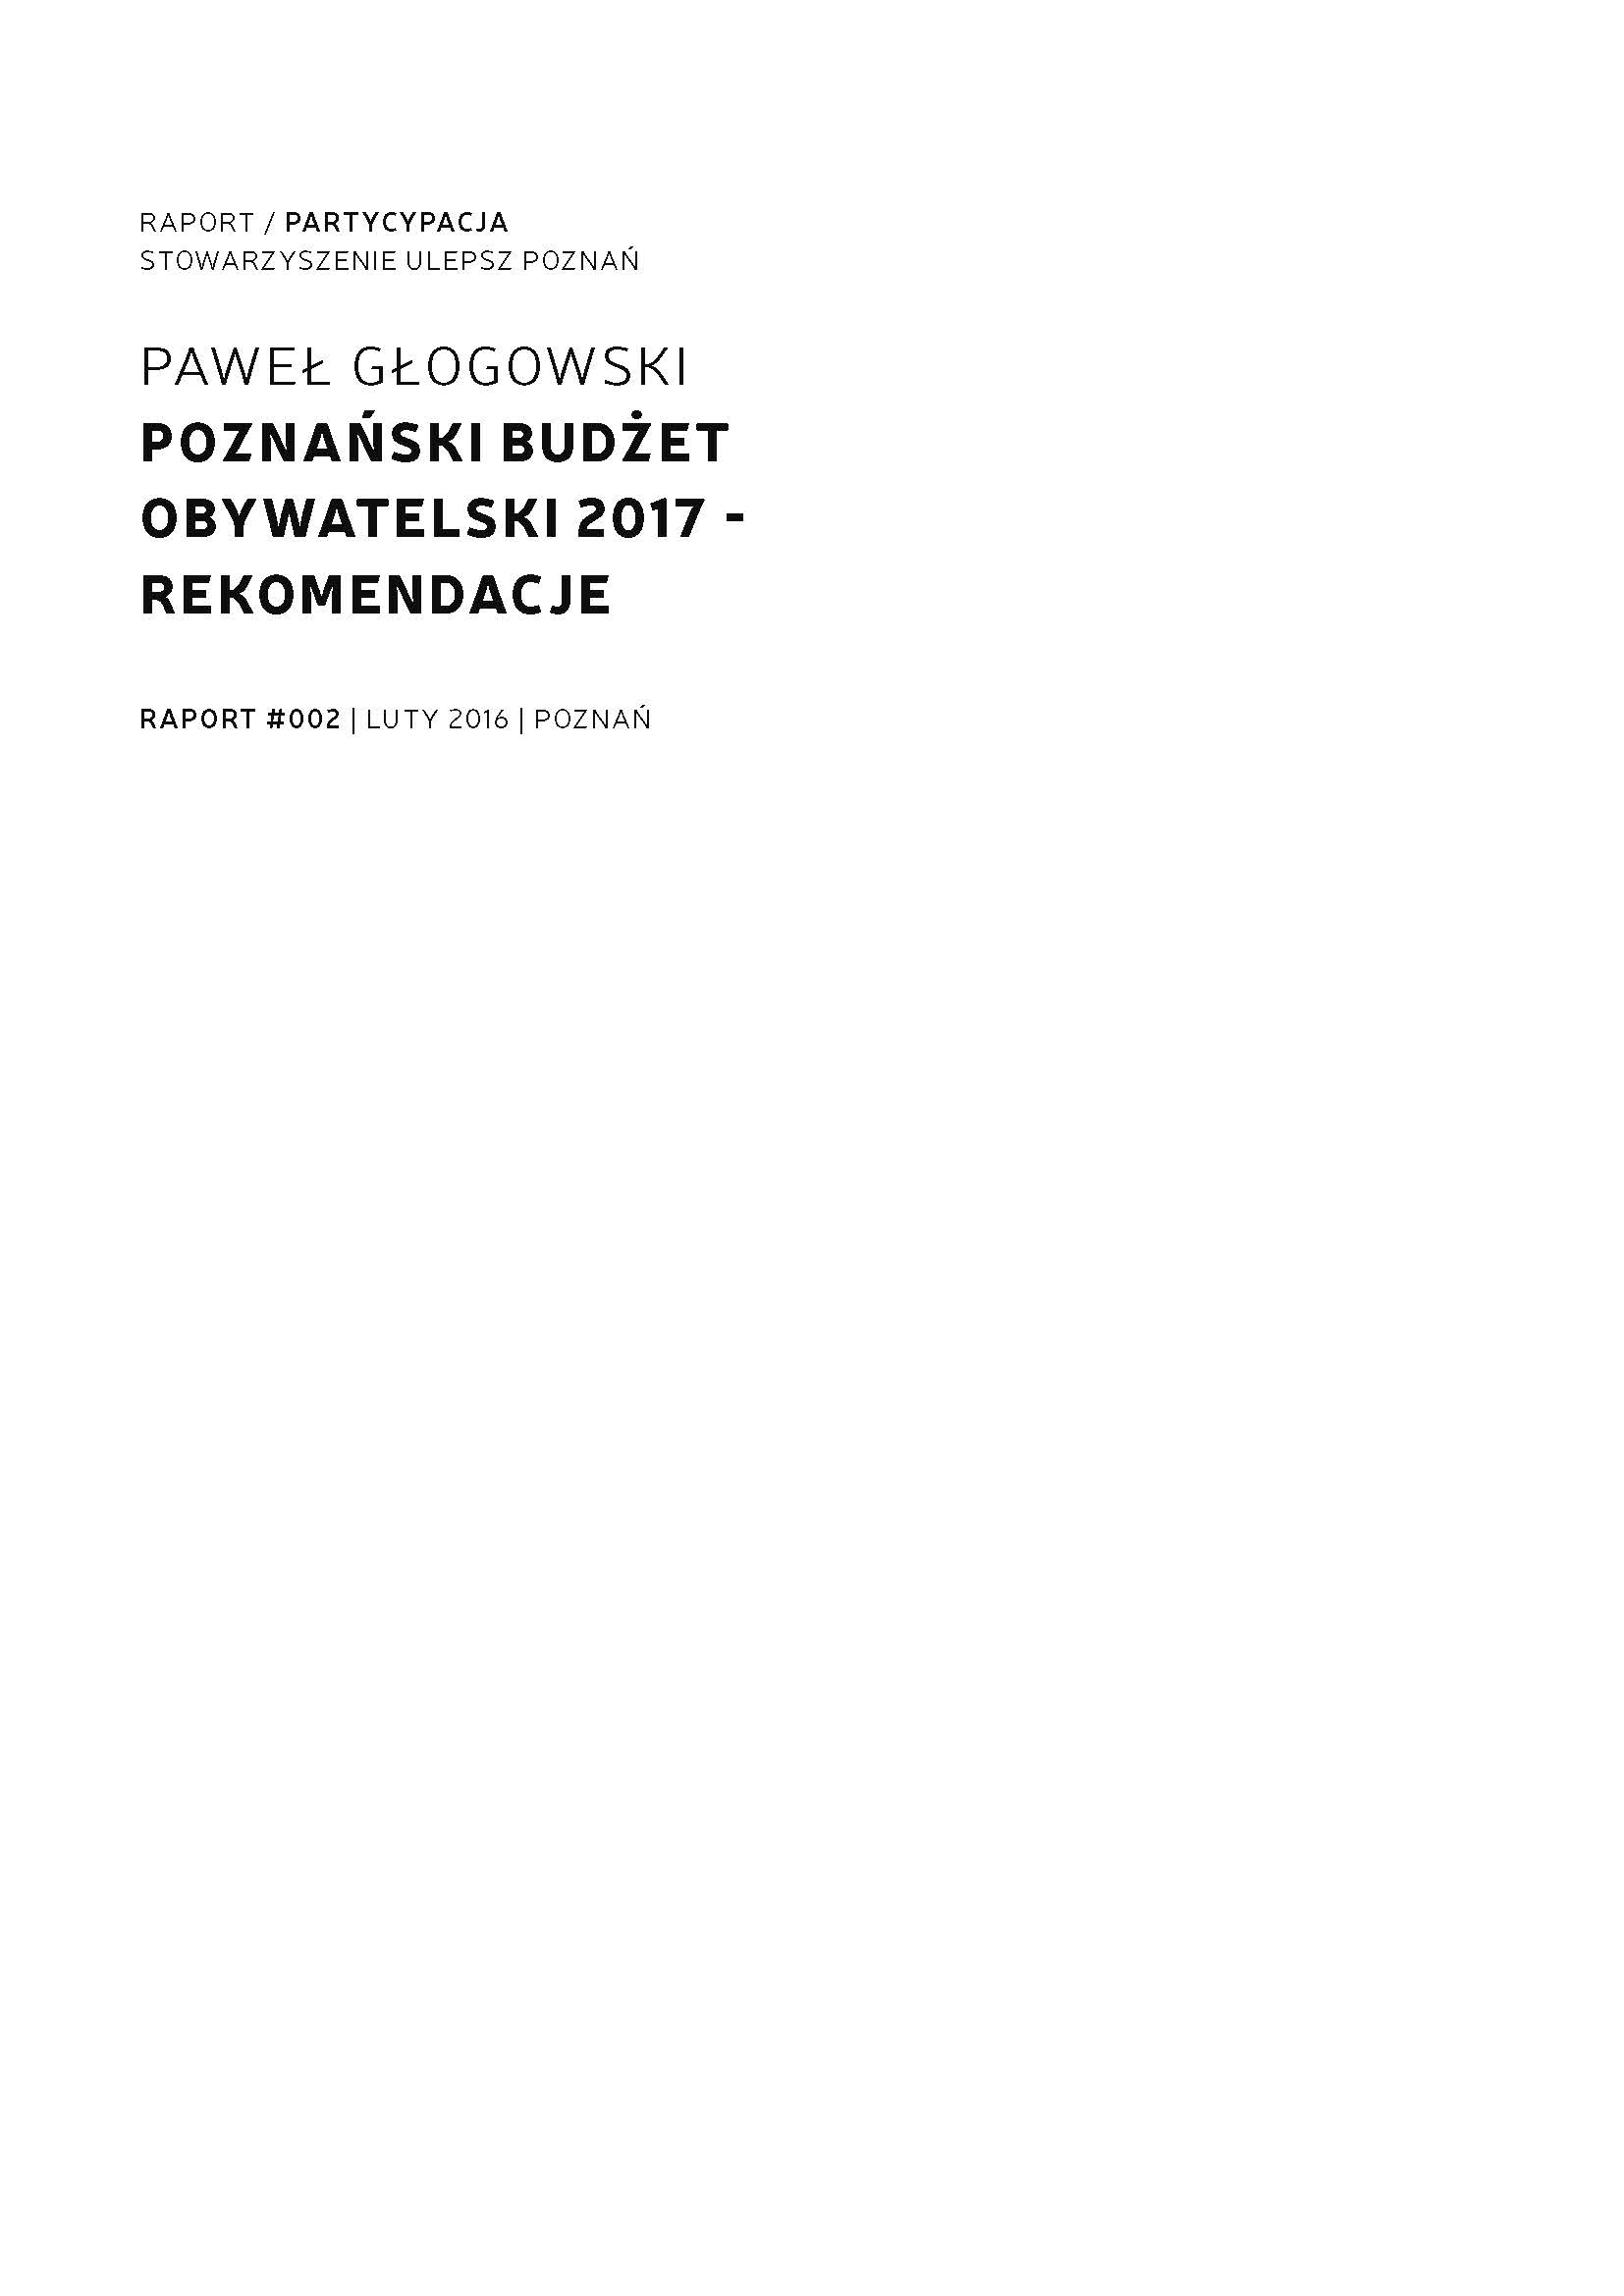 Poznan Participatory Budget 2017 - Recommendations